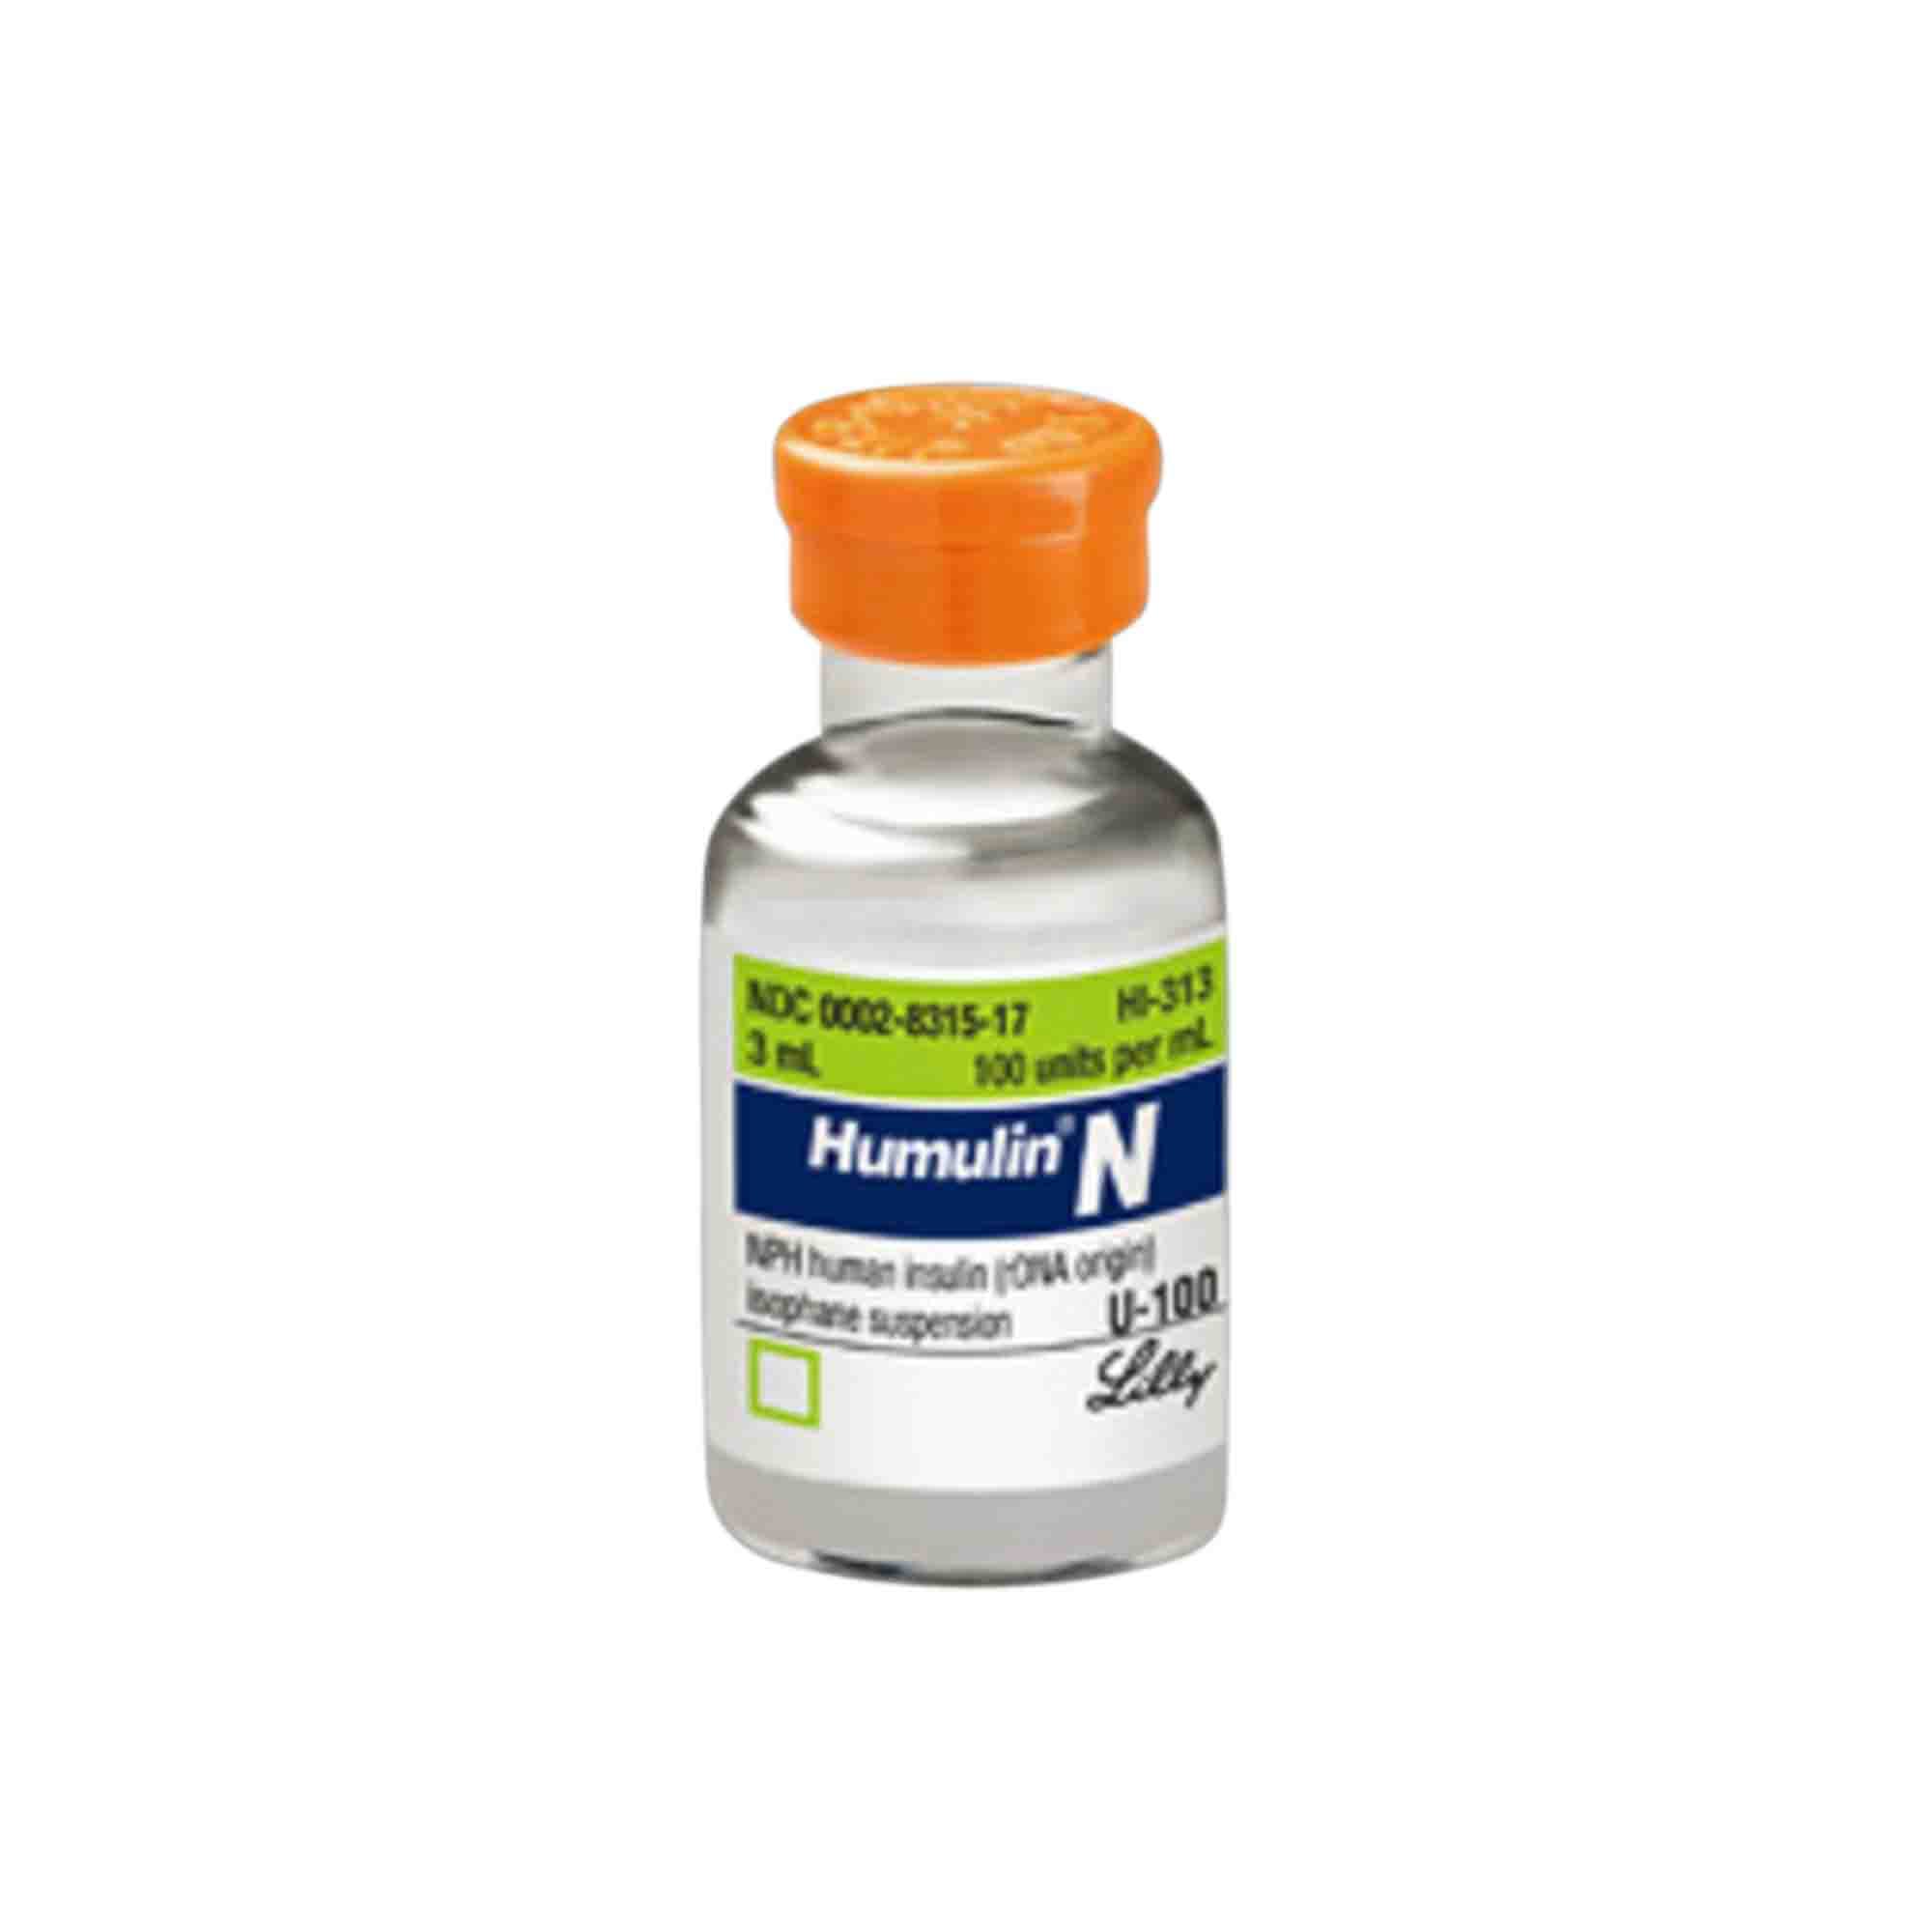 Humulin N Insulin 100 units/mL, 3ml Vial